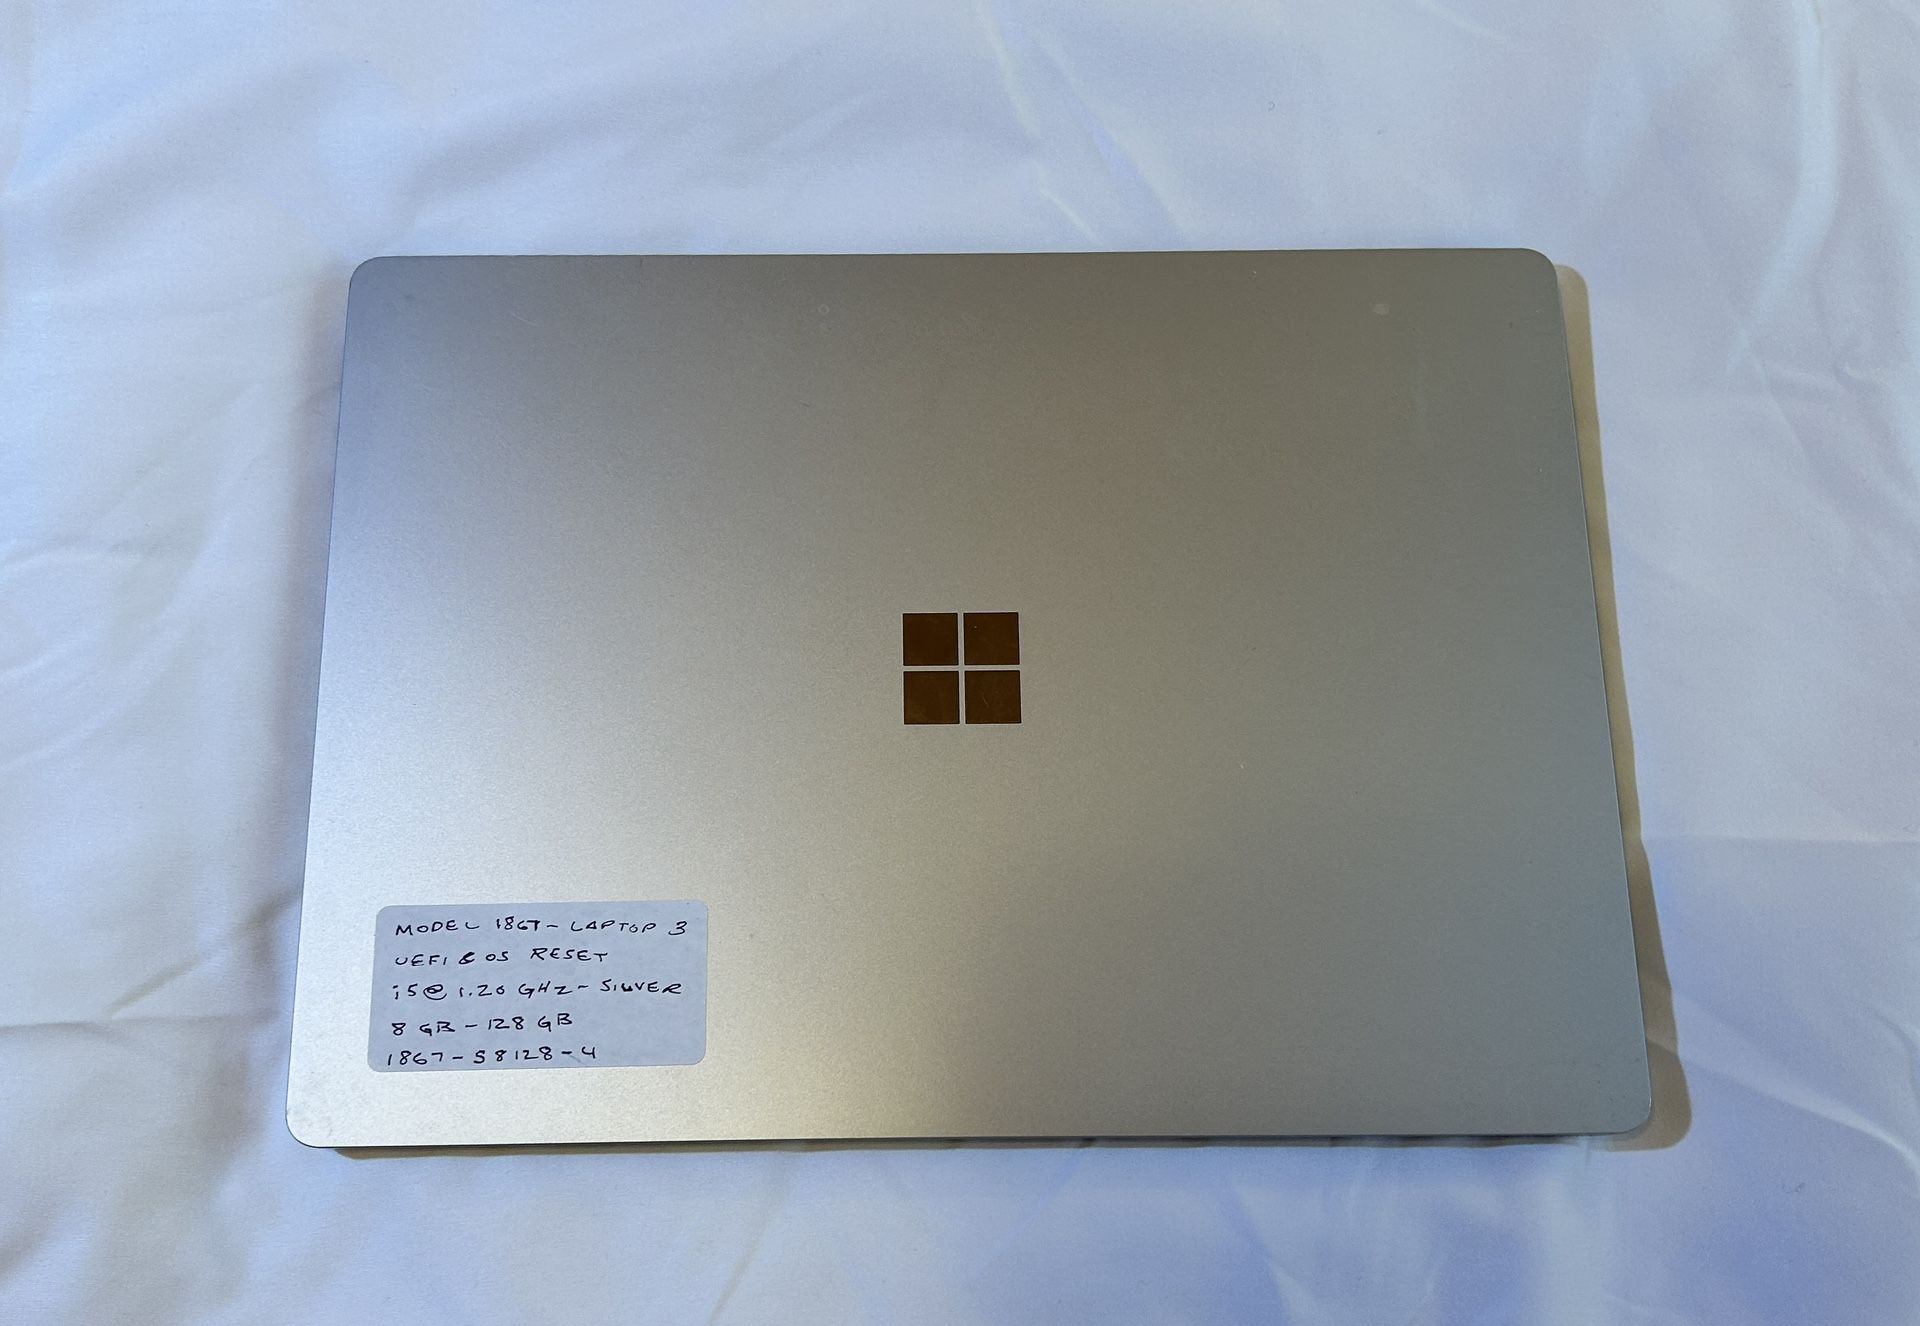 Microsoft Surface Laptop 3 - Silver 